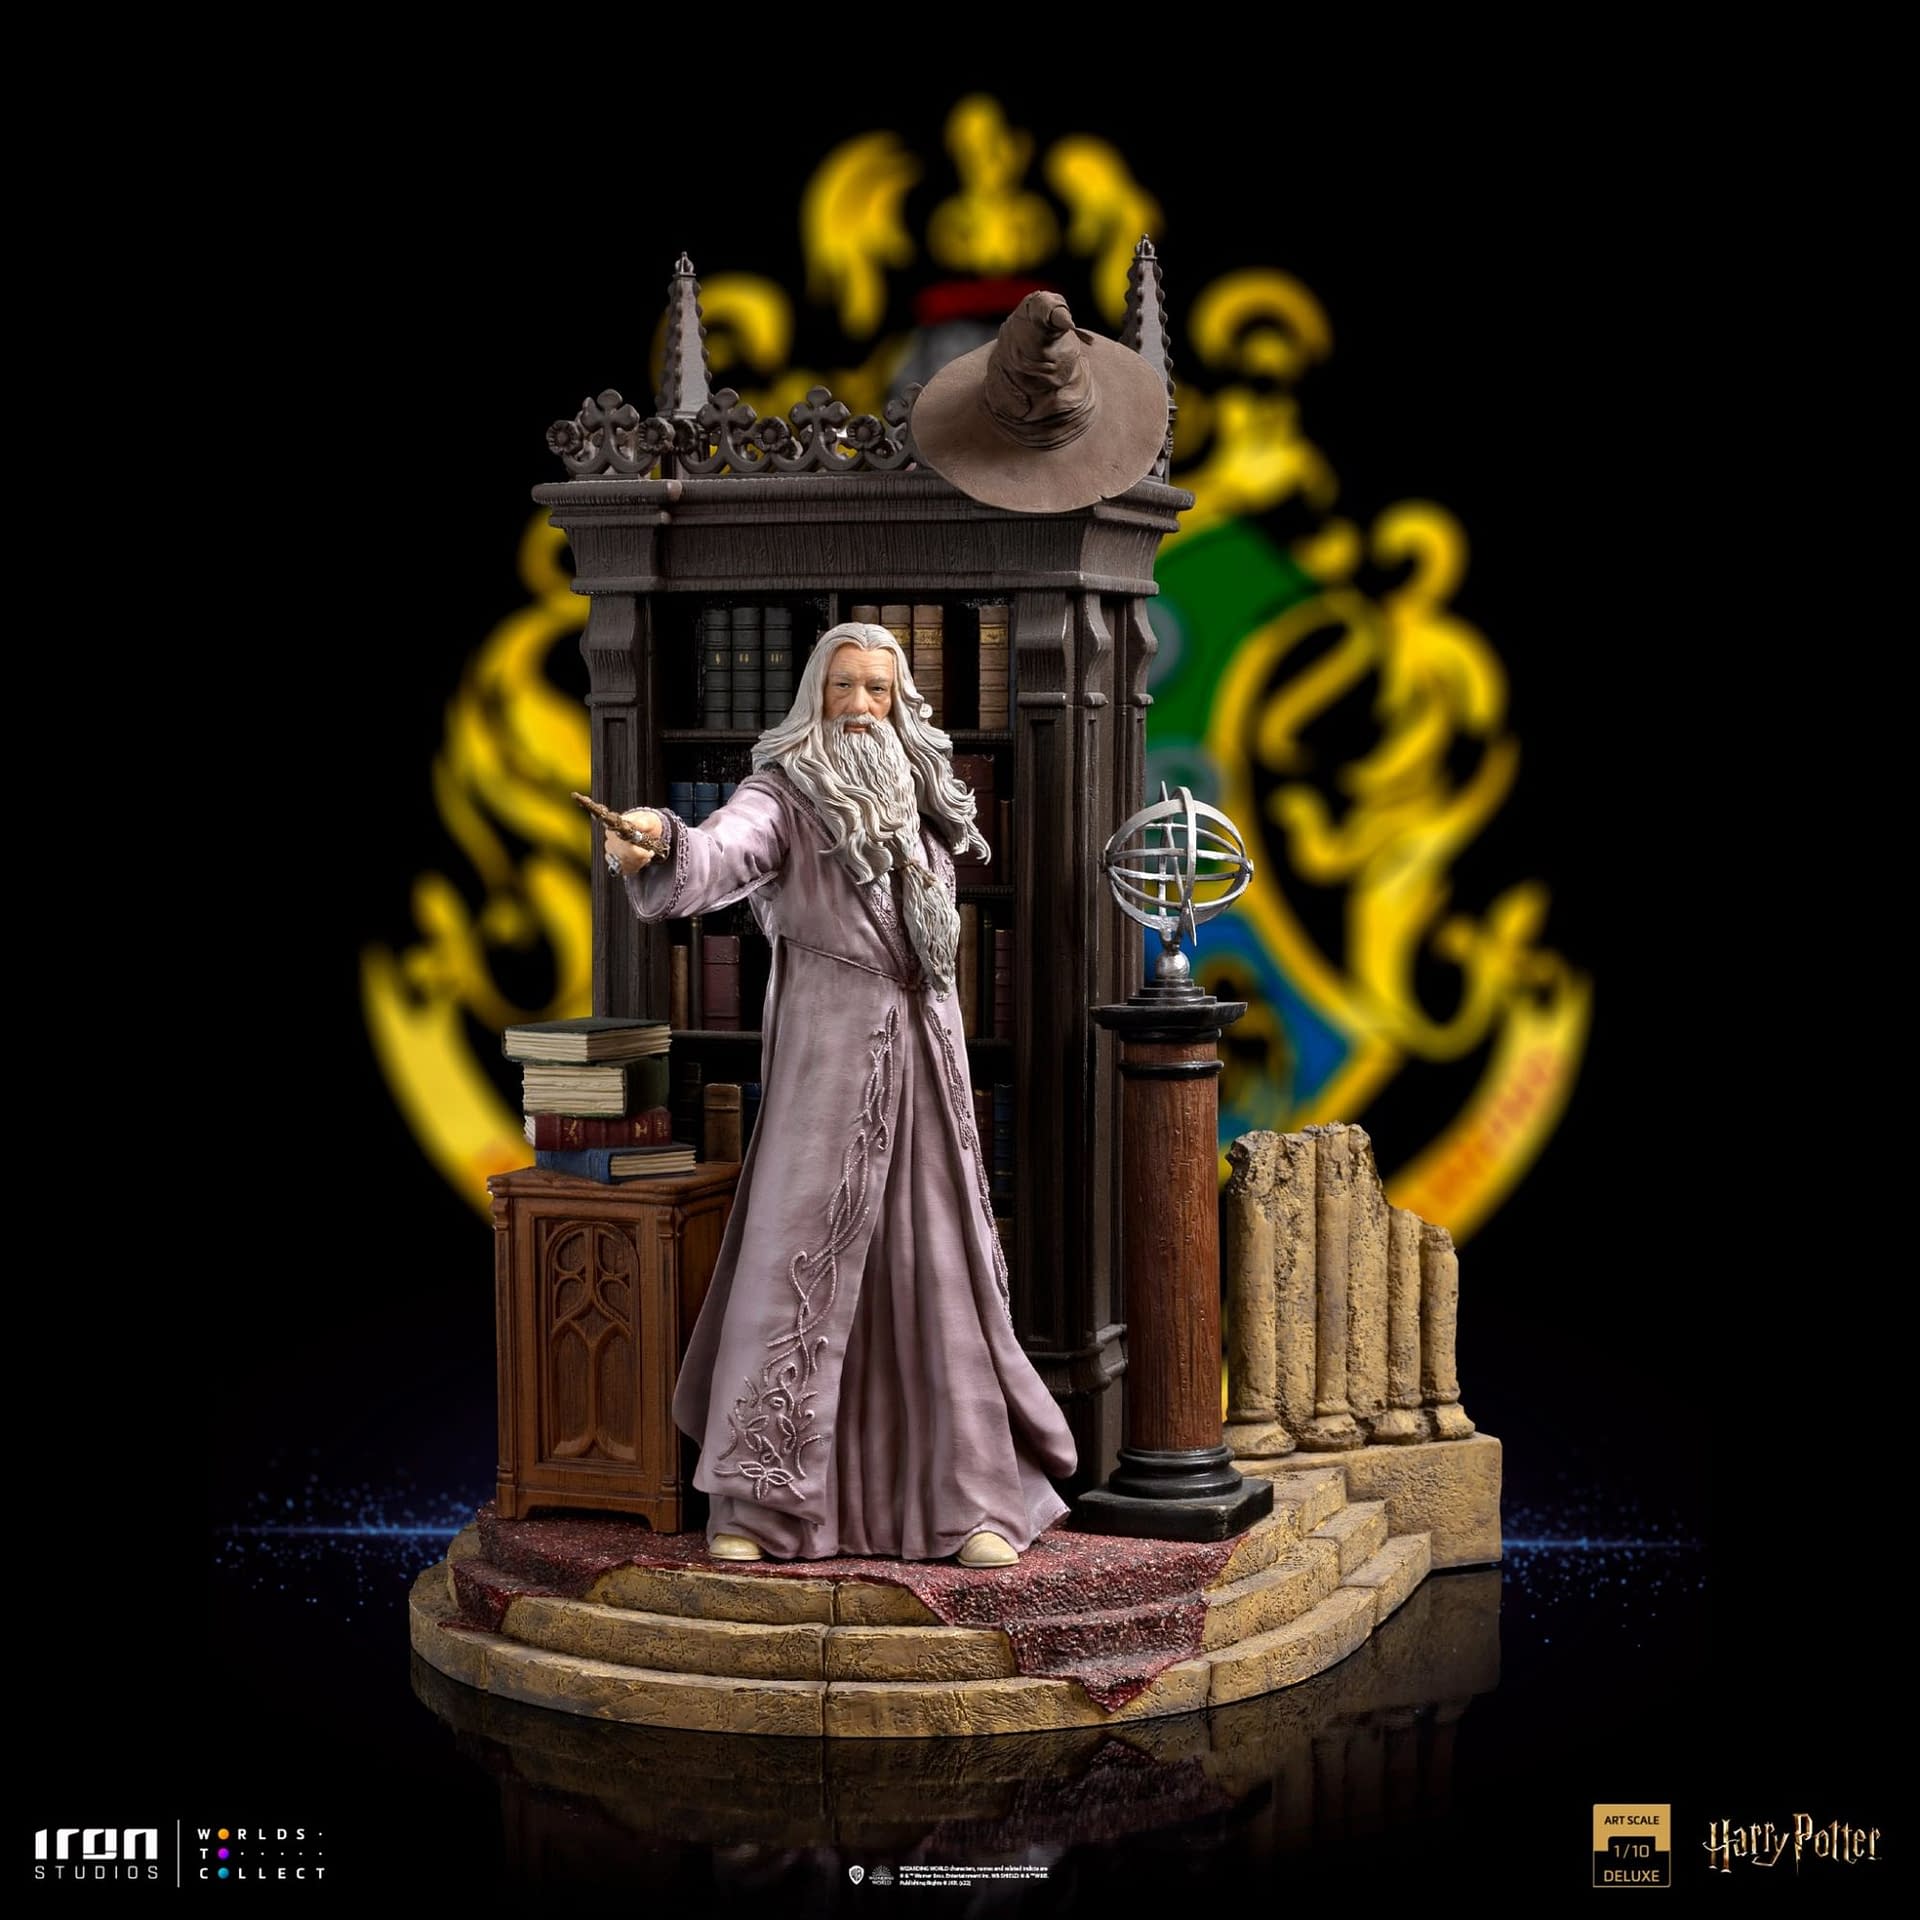 Harry Potter's Dumbledore Brings Some Magic to Iron Studios 